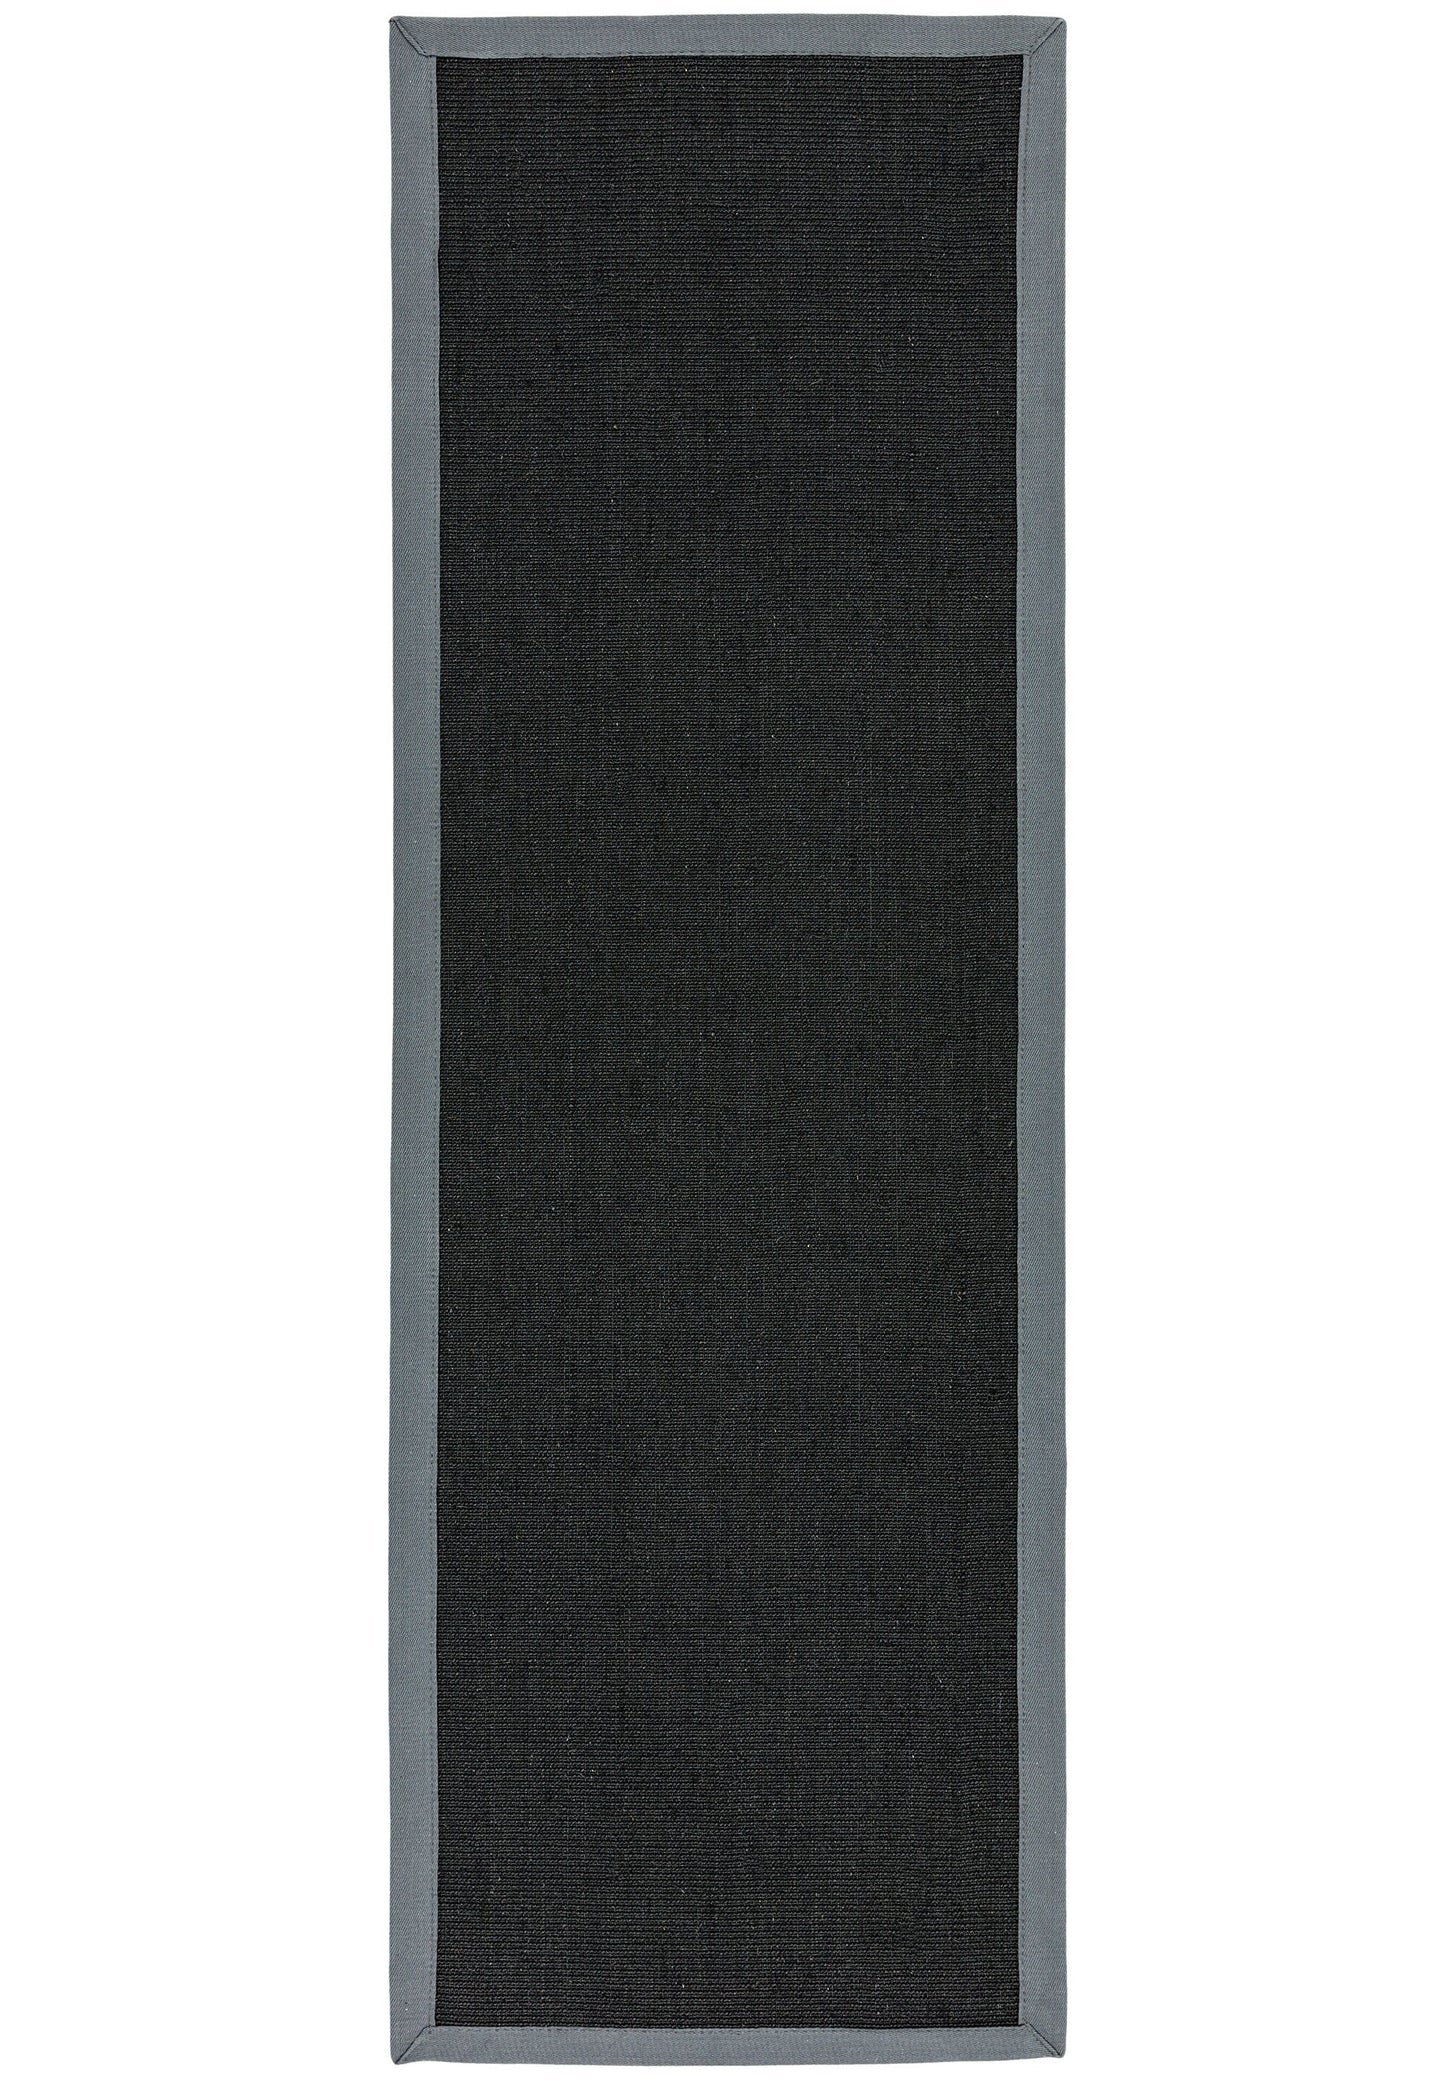 Asiatic Carpets Sisal Machine Woven Rug Black/Grey - 240 x 340cm